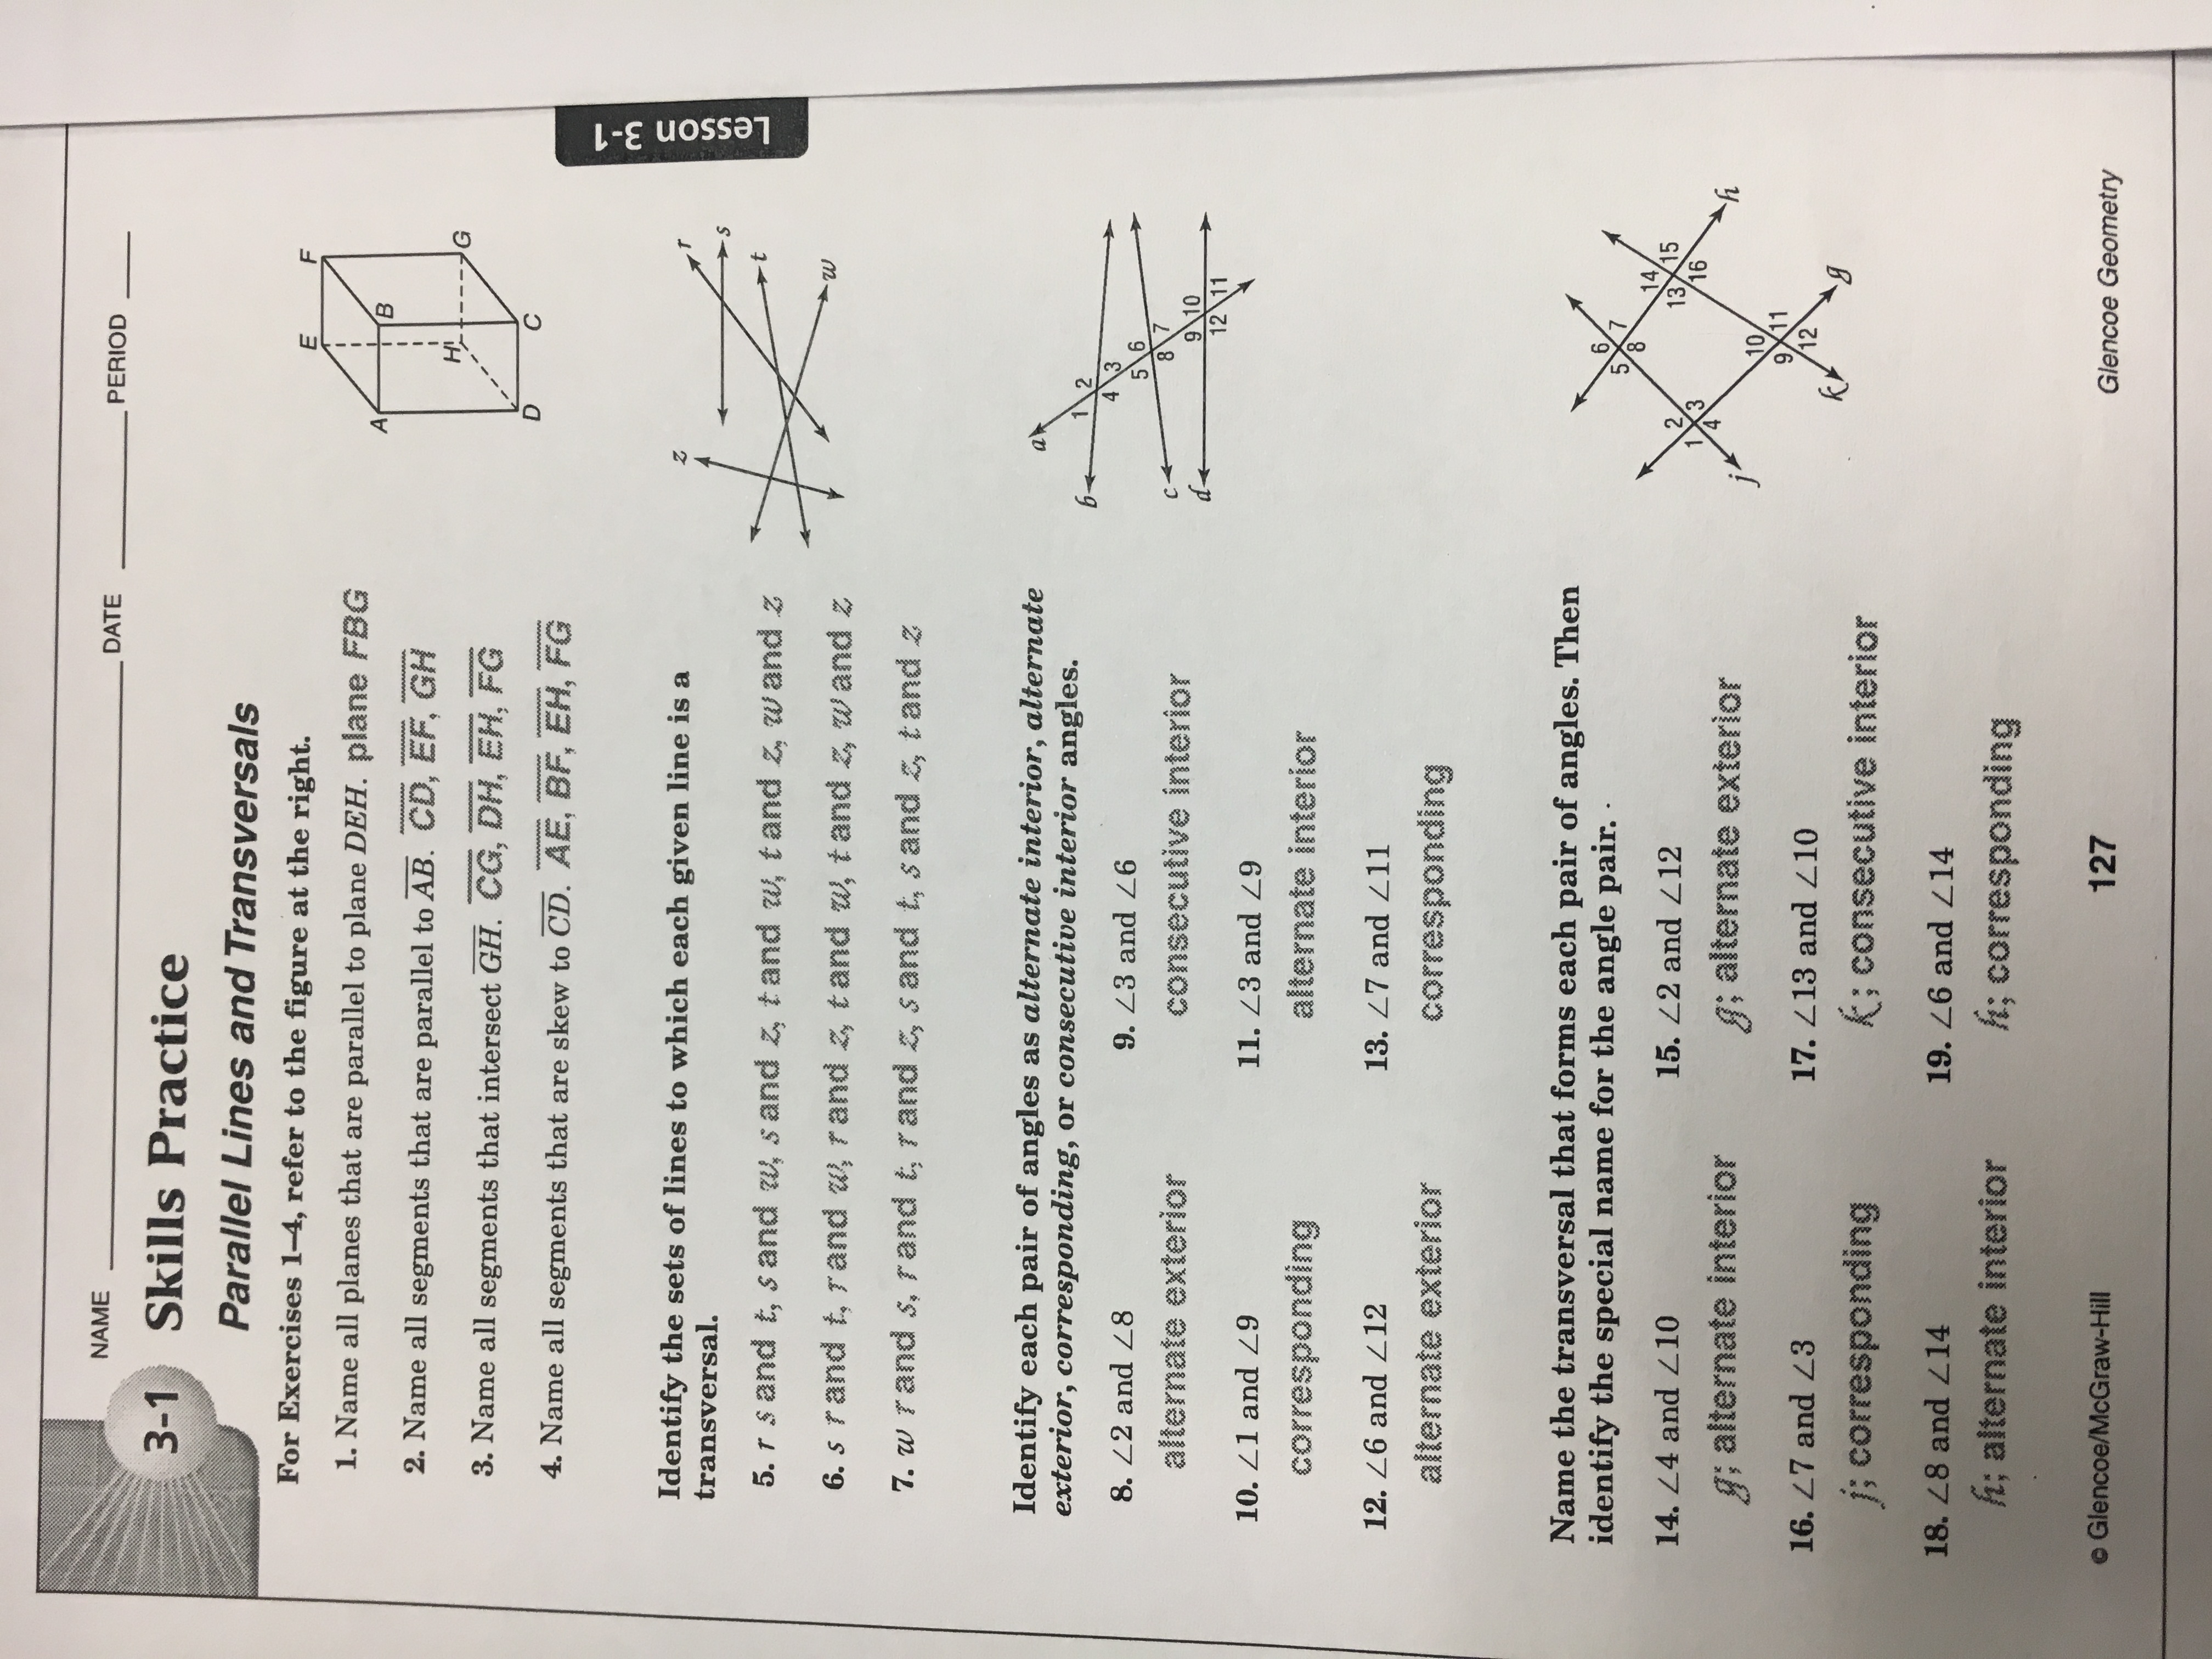 Glencoe Geometry 7 7 Skills Practice Answers